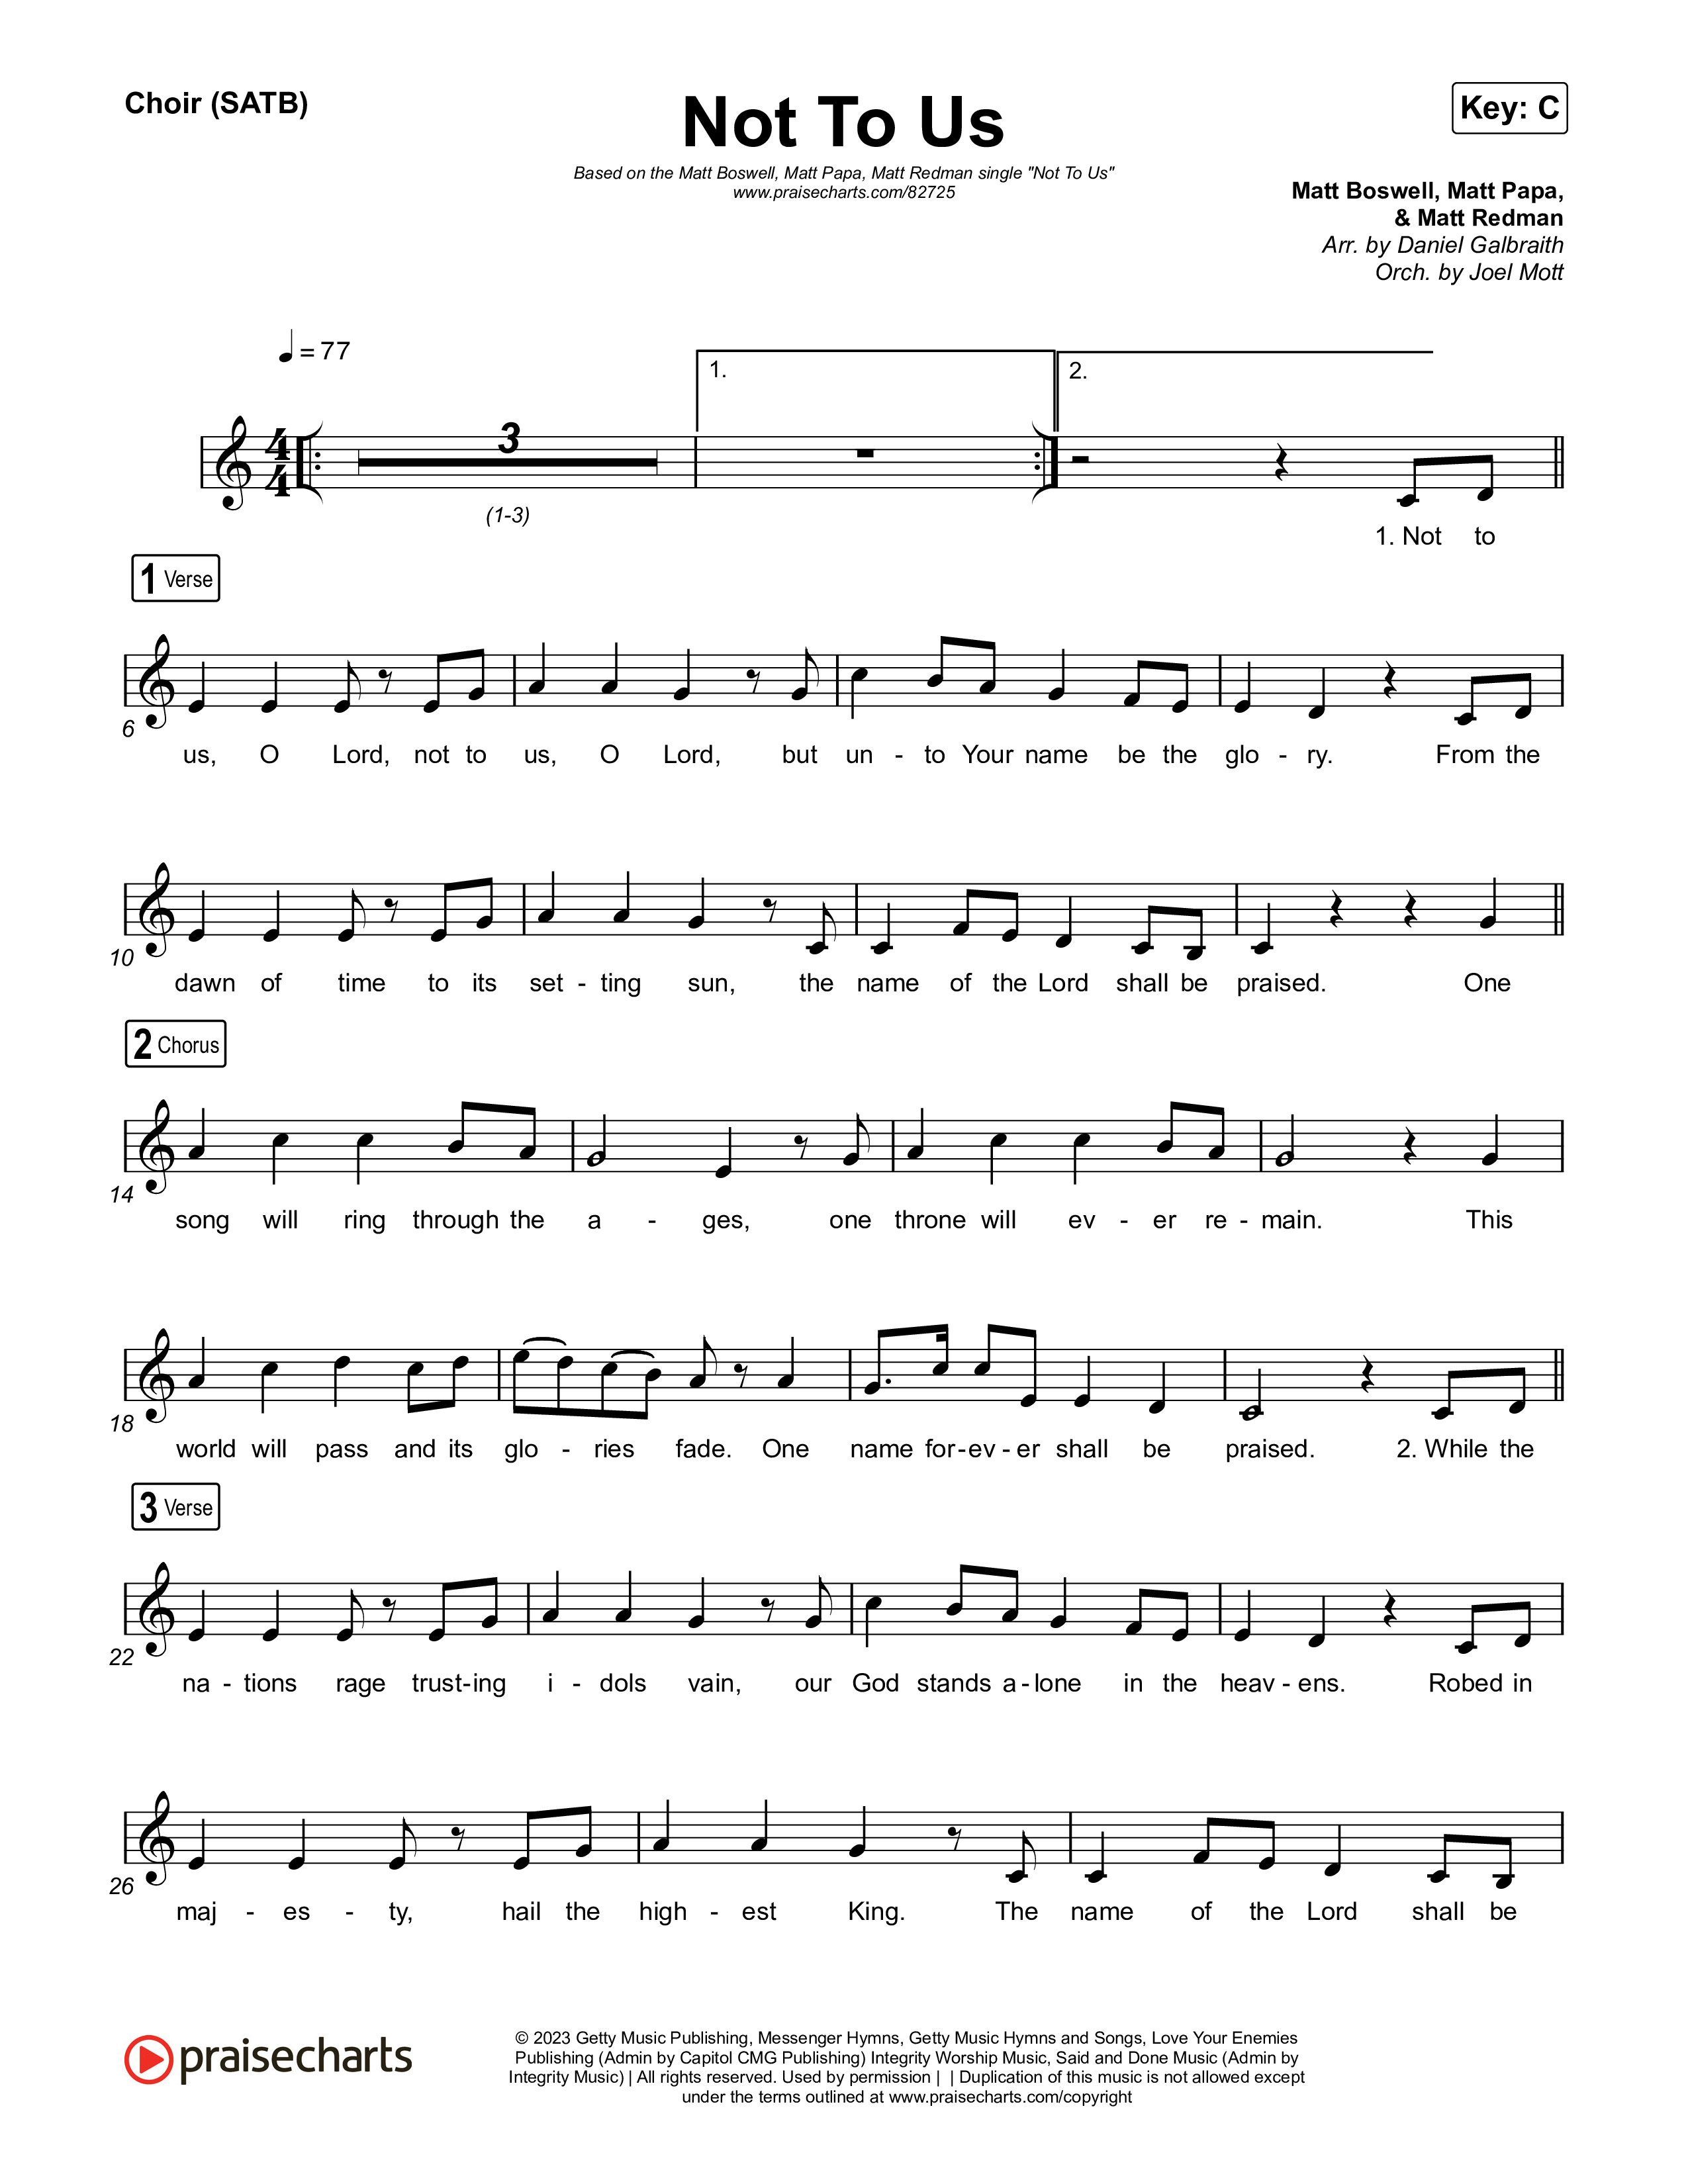 Not to Us (One Name Forever Shall Be Praised) Choir Sheet (SATB) (Matt Papa / Matt Boswell / Matt Redman)